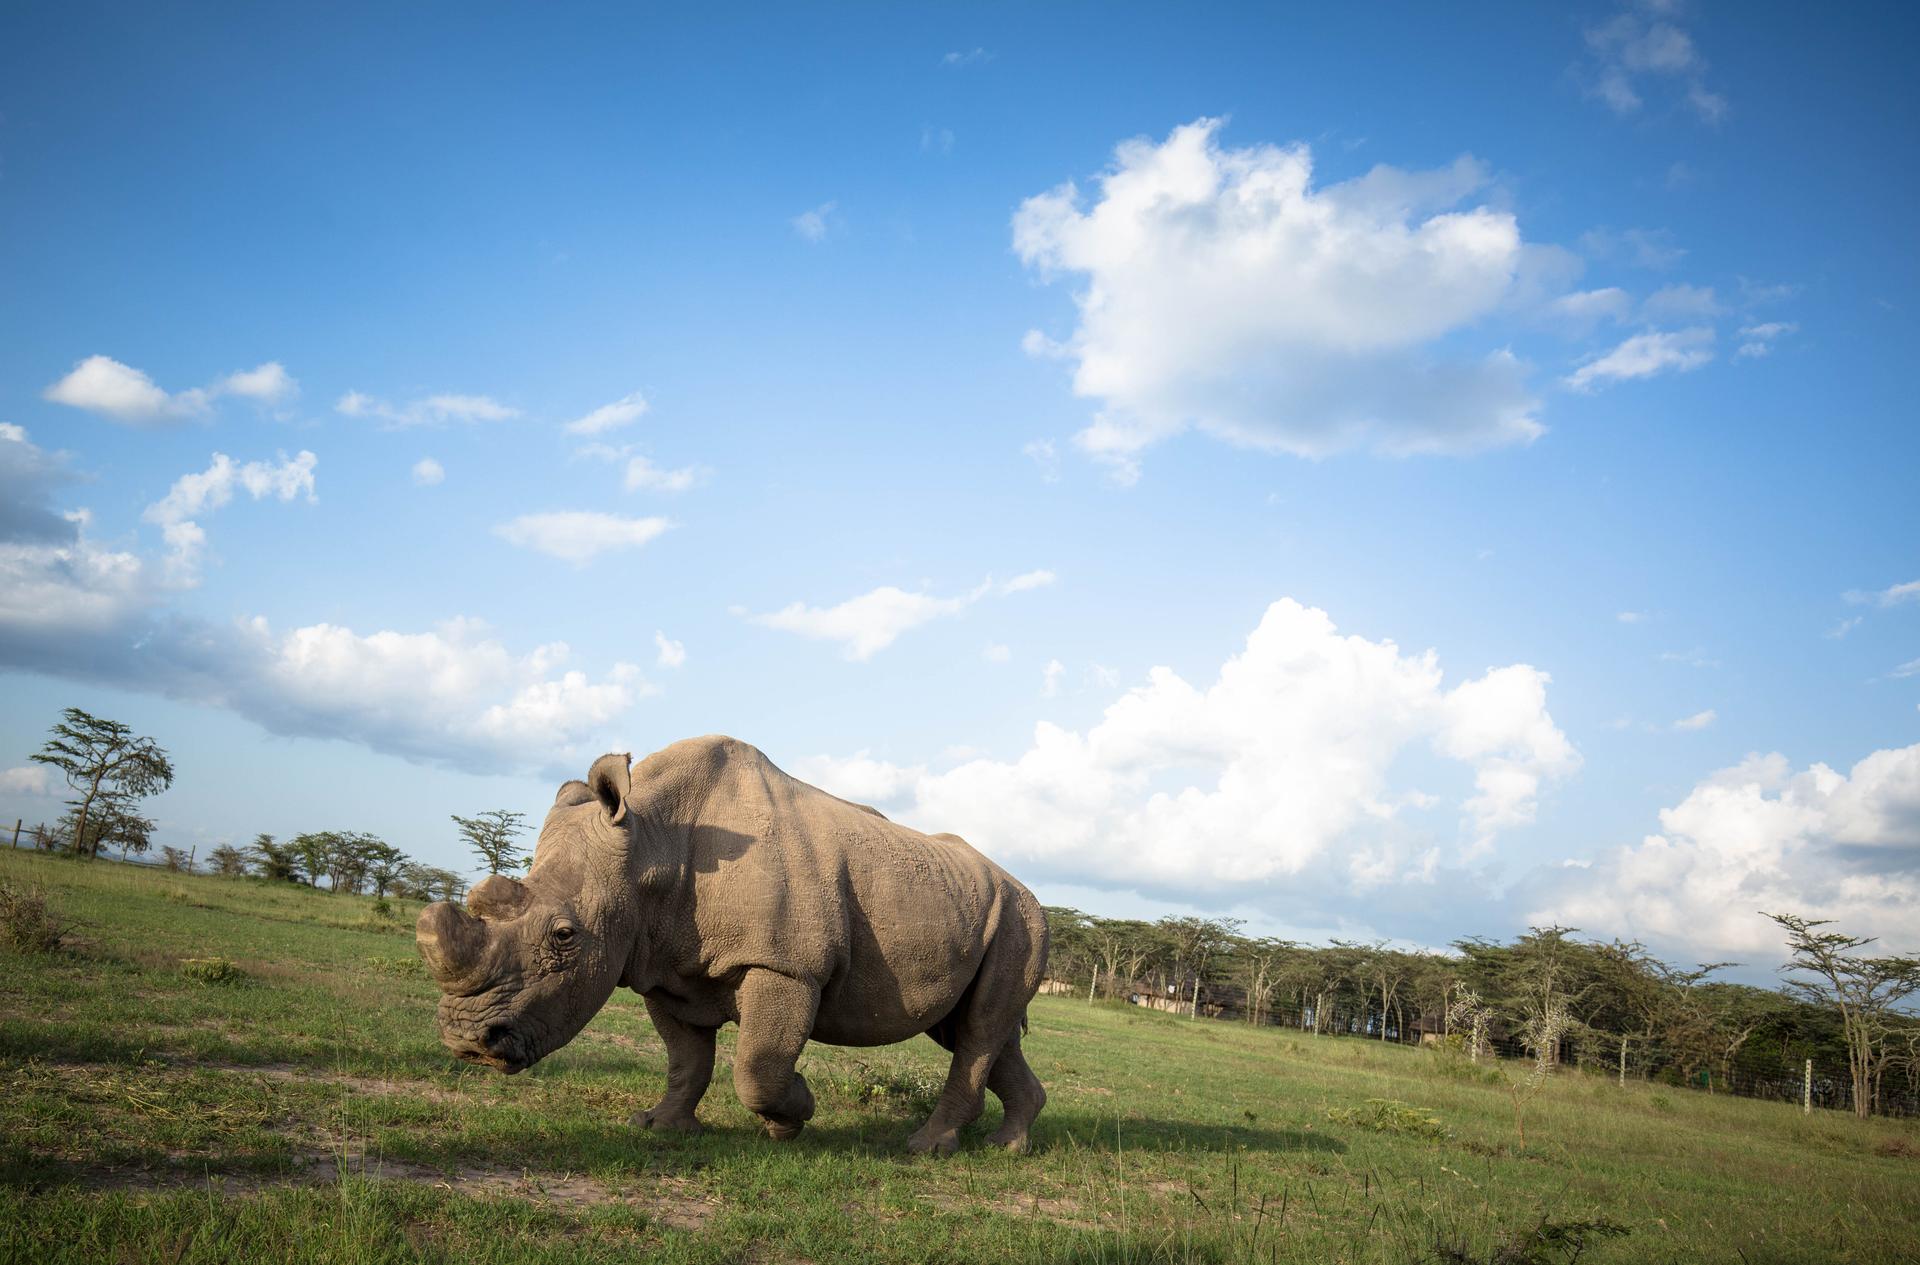 Rhinoceros on field with gentle sunlight behind him